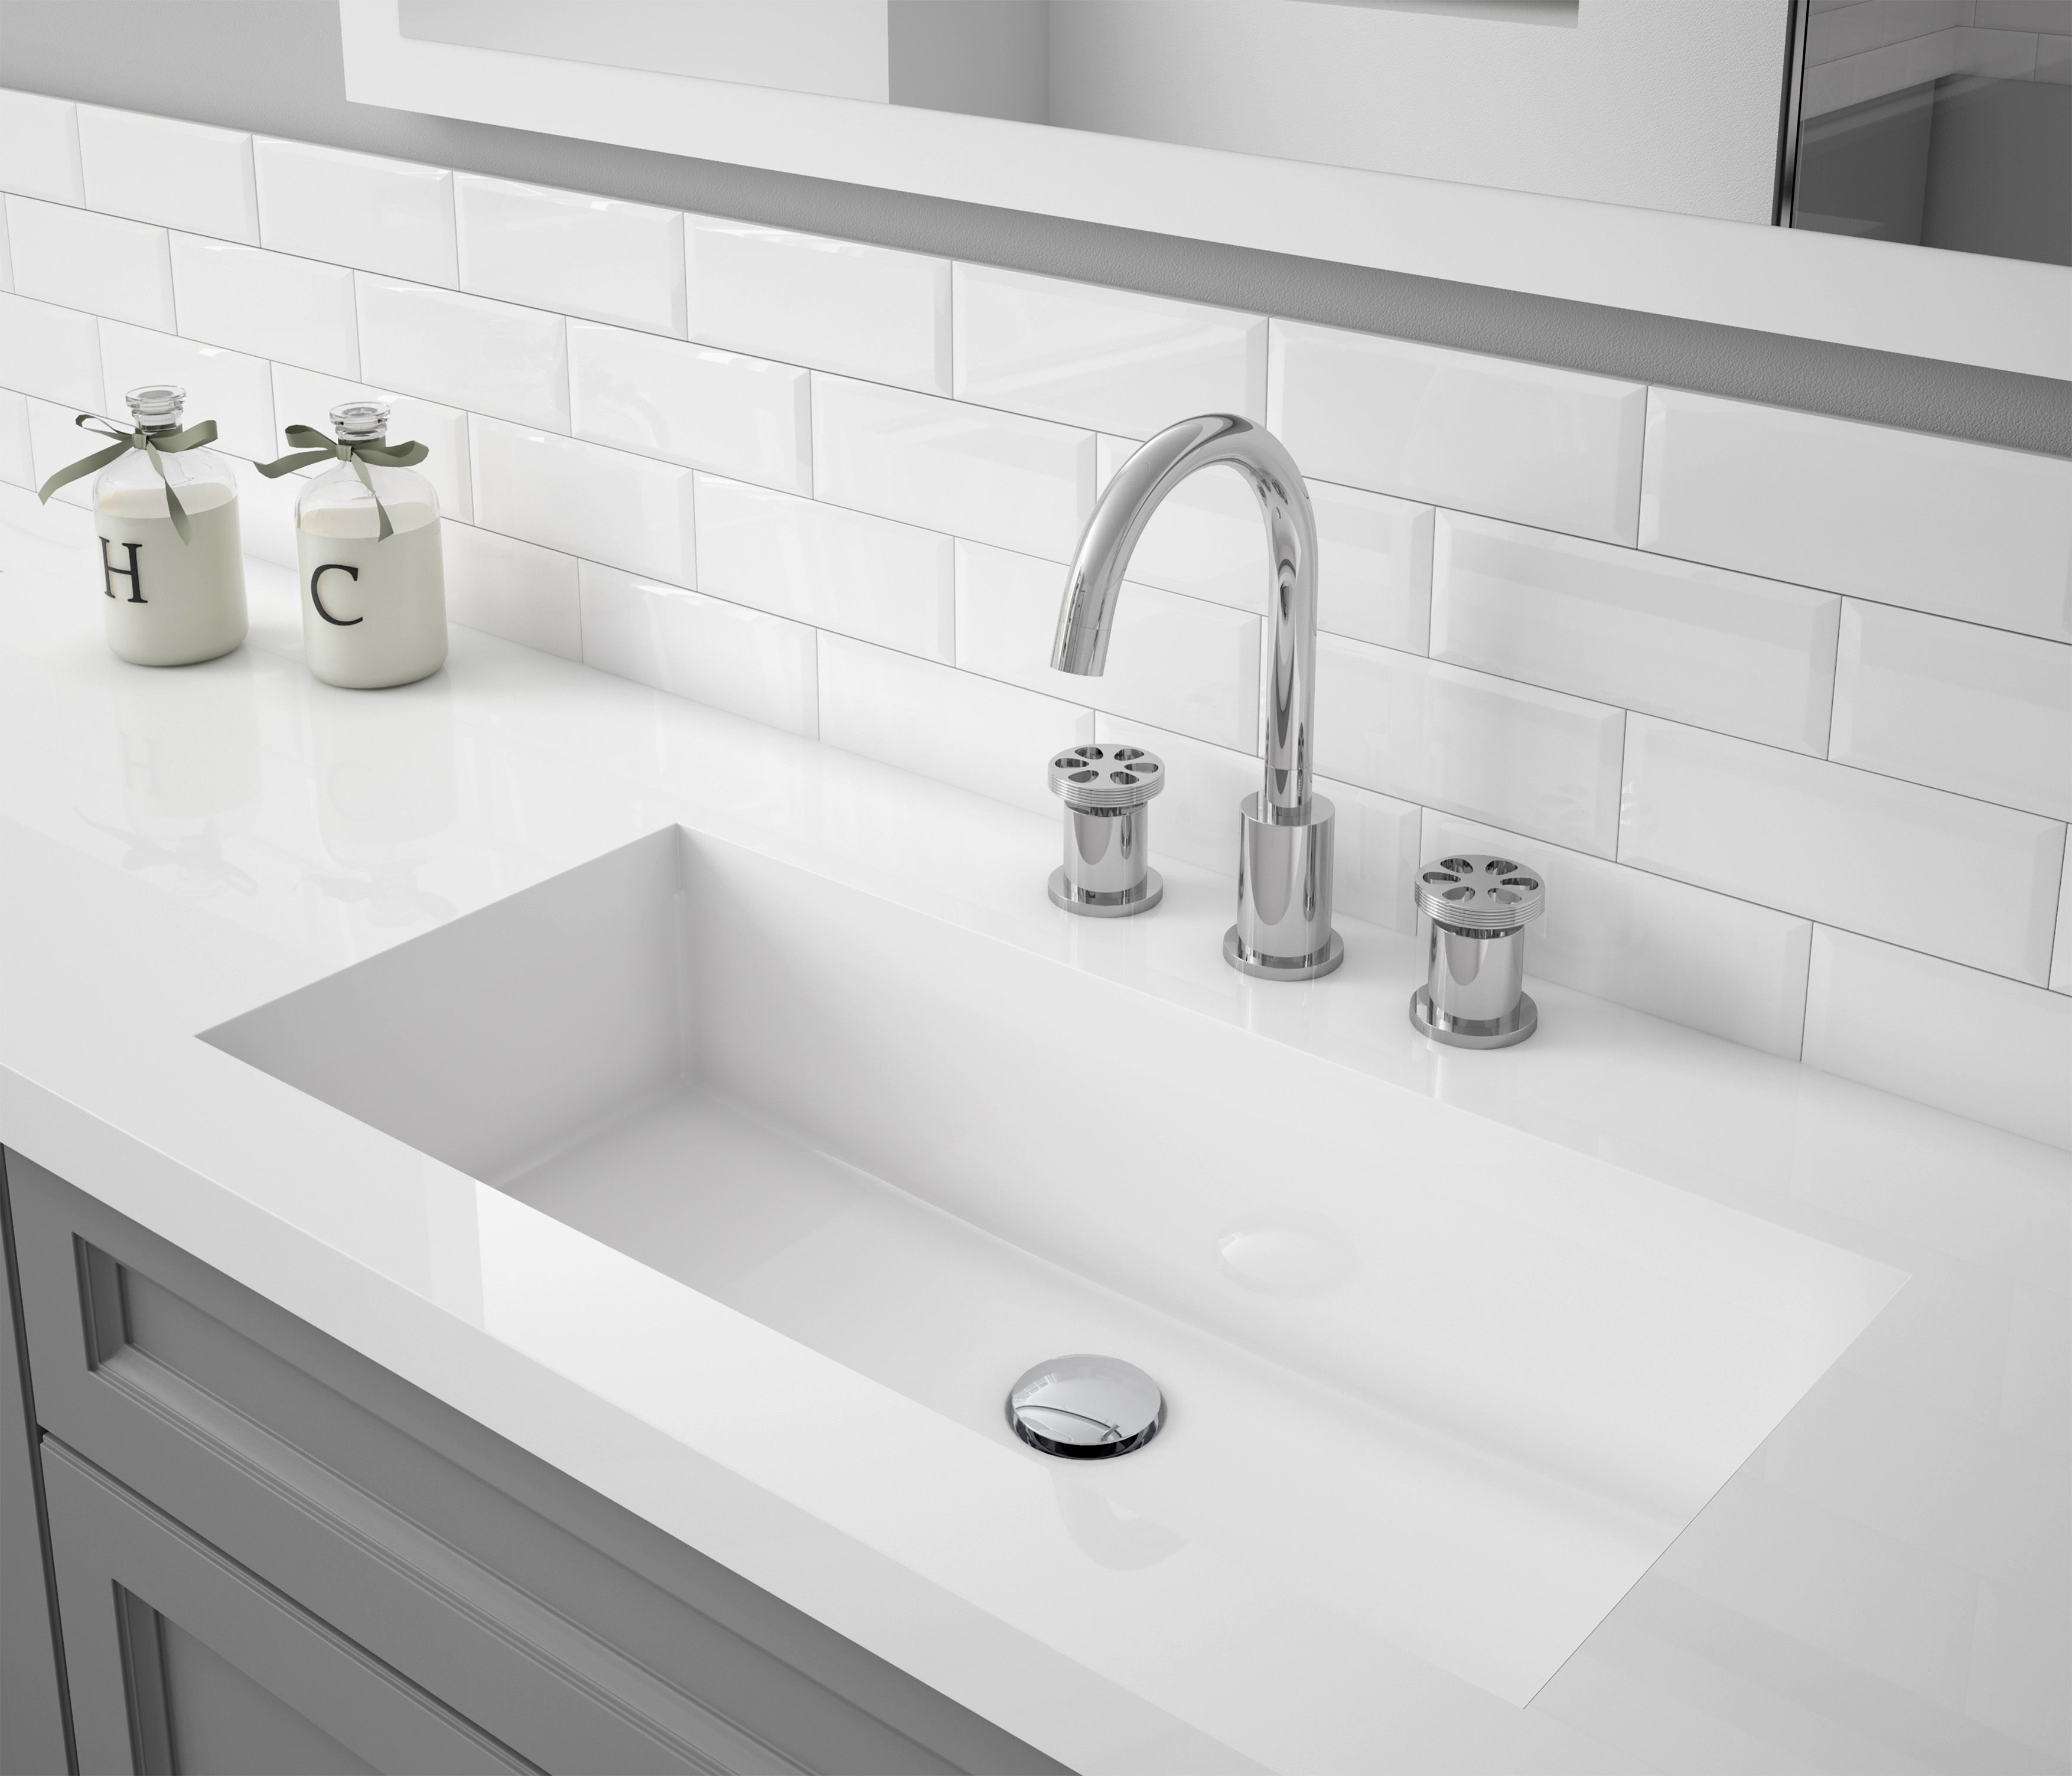 Ancona Nova Series Widespread Bathroom Faucet in Chrome